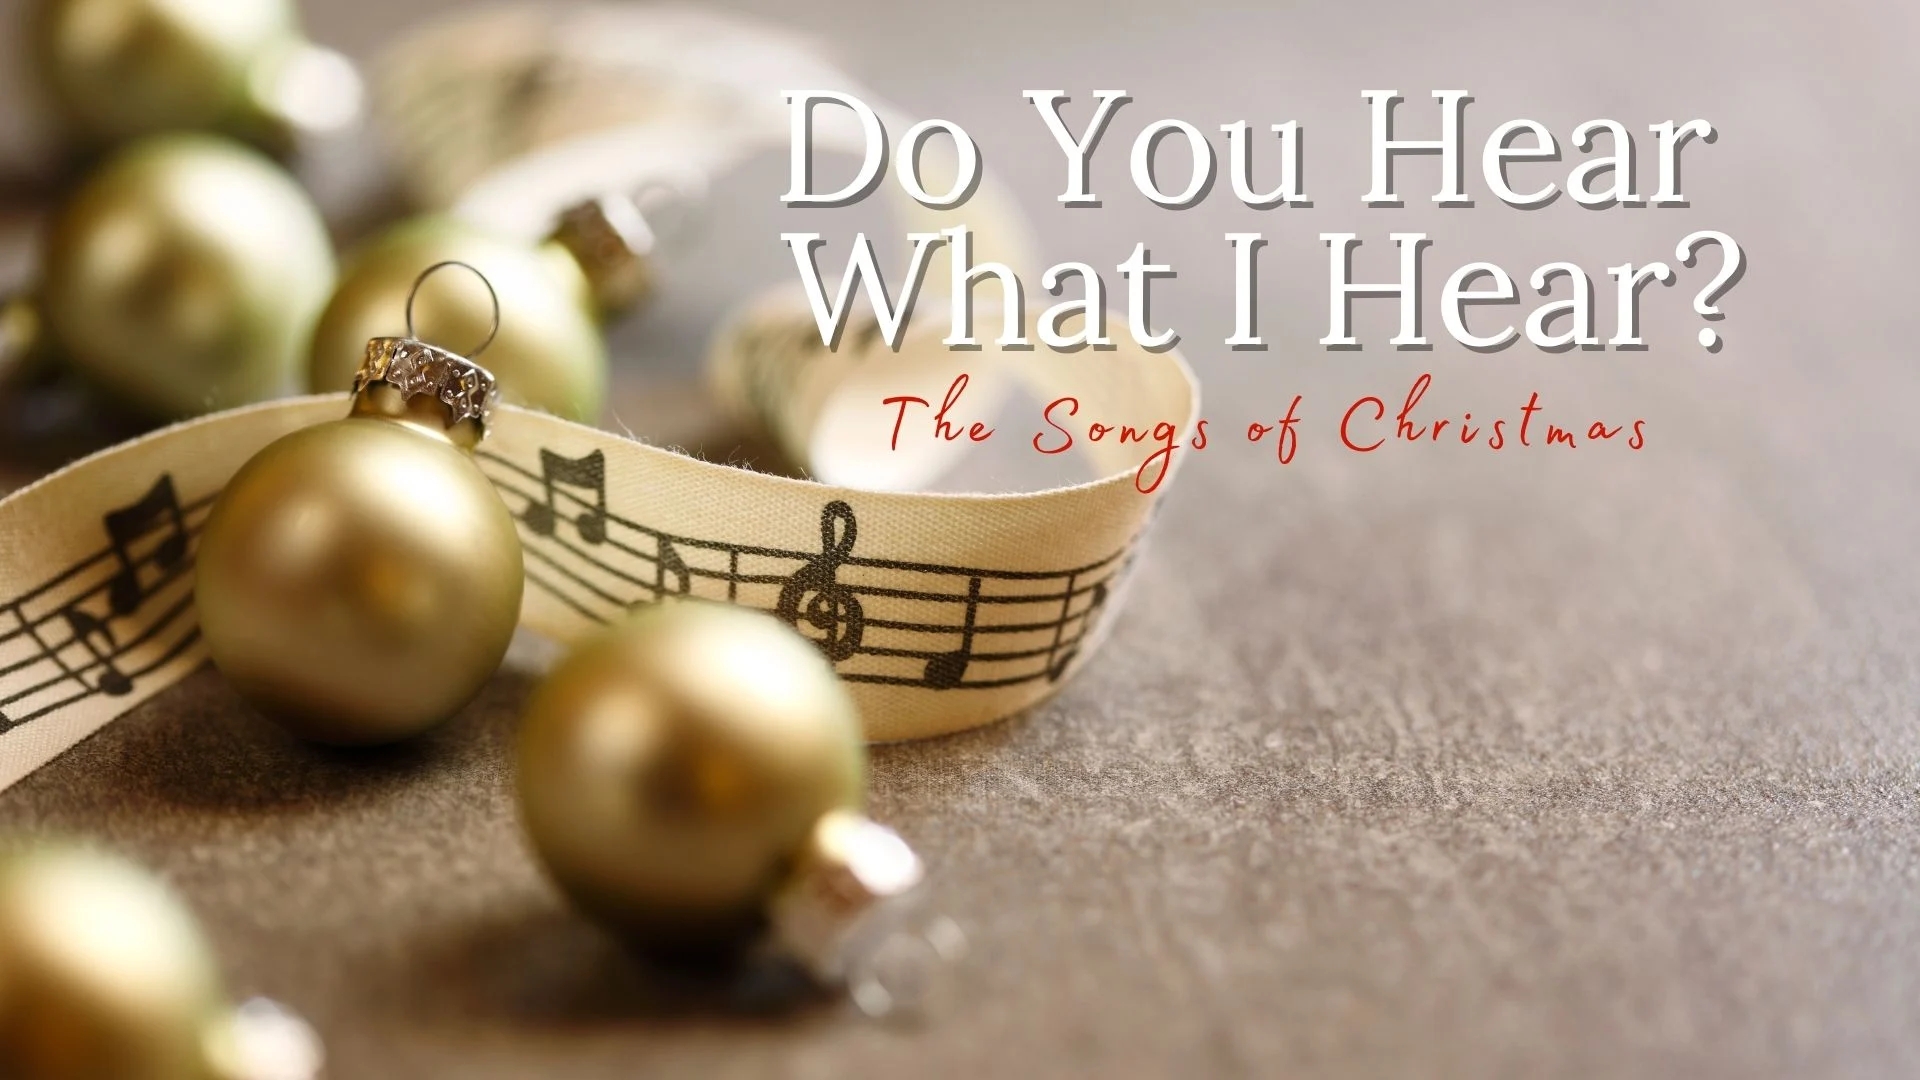 Songs of Christmas 1110 x 624